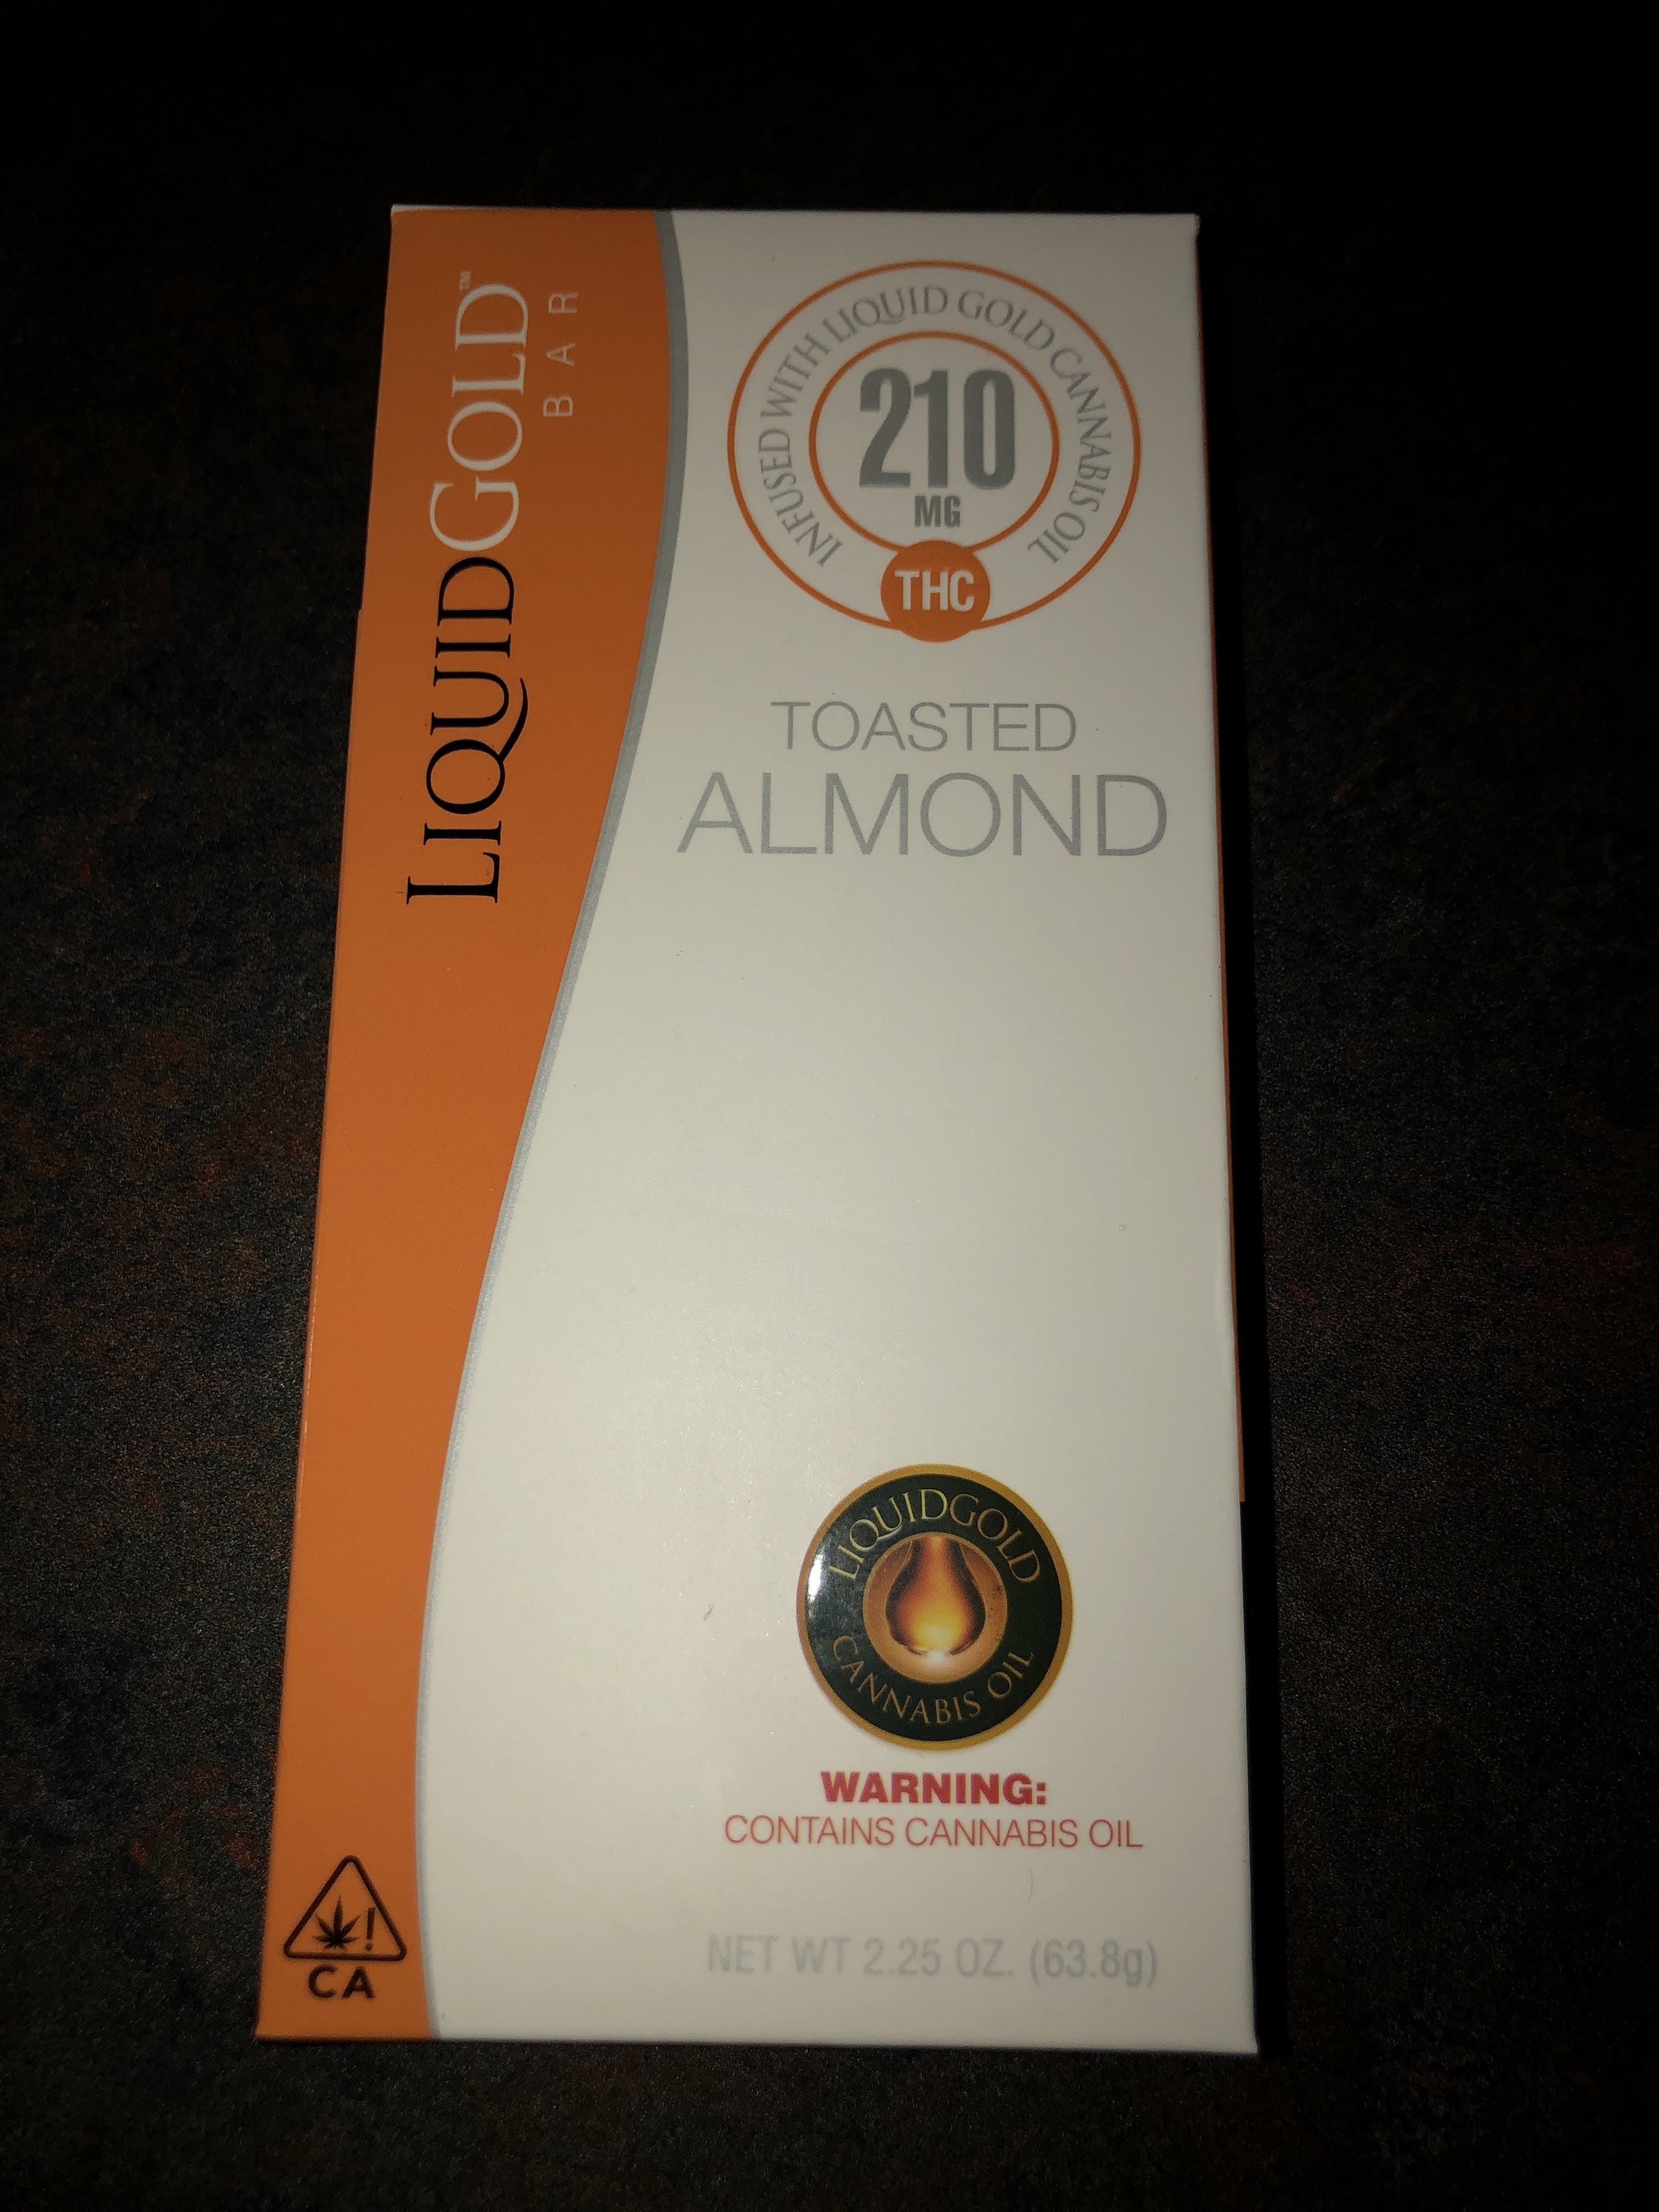 edible-liquid-gold-toasted-almond-chocolate-bar-210-mg